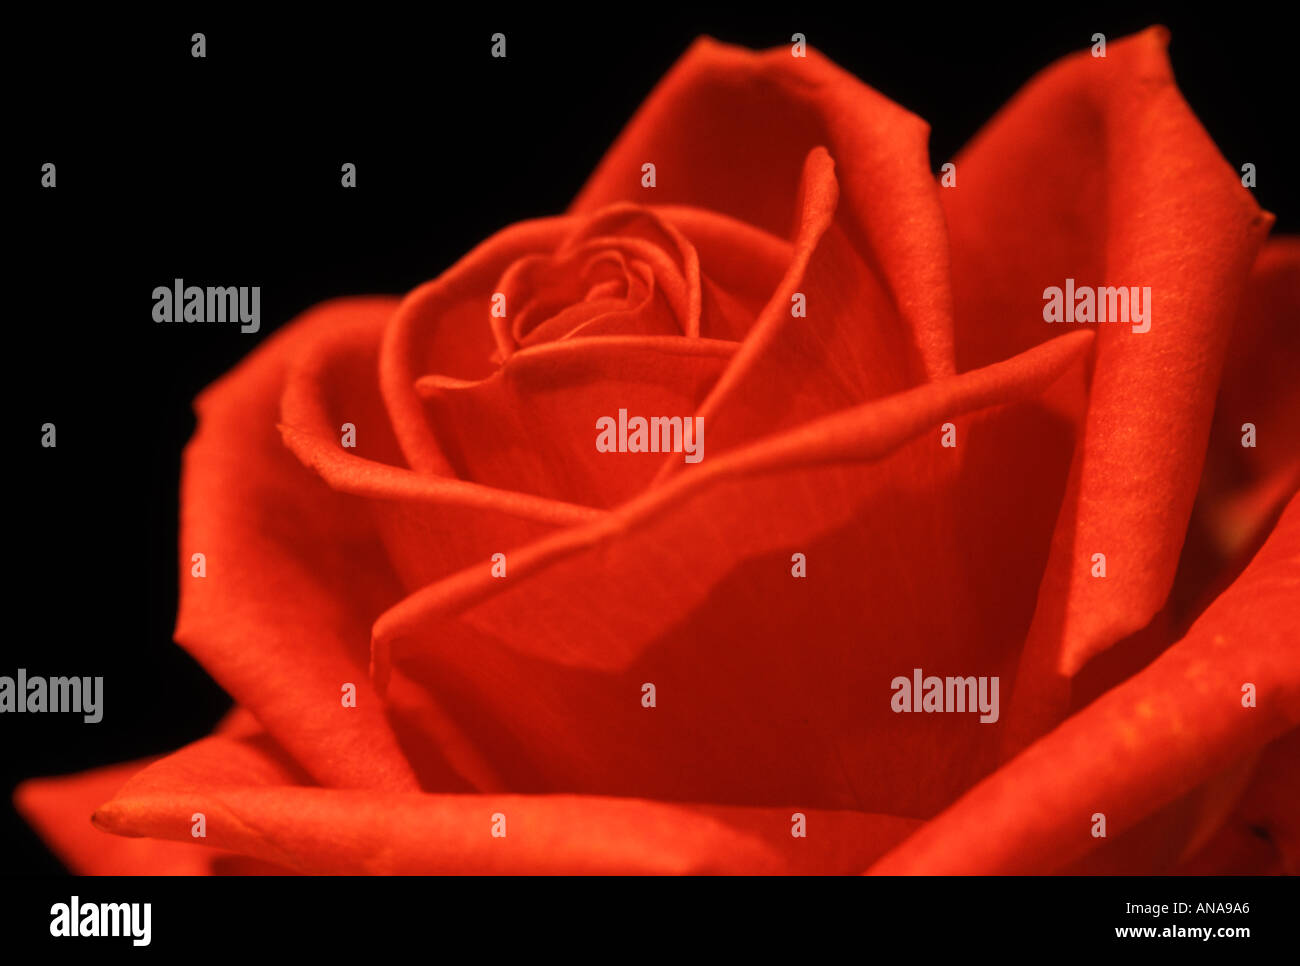 Single red rose close up against plain black background Stock Photo